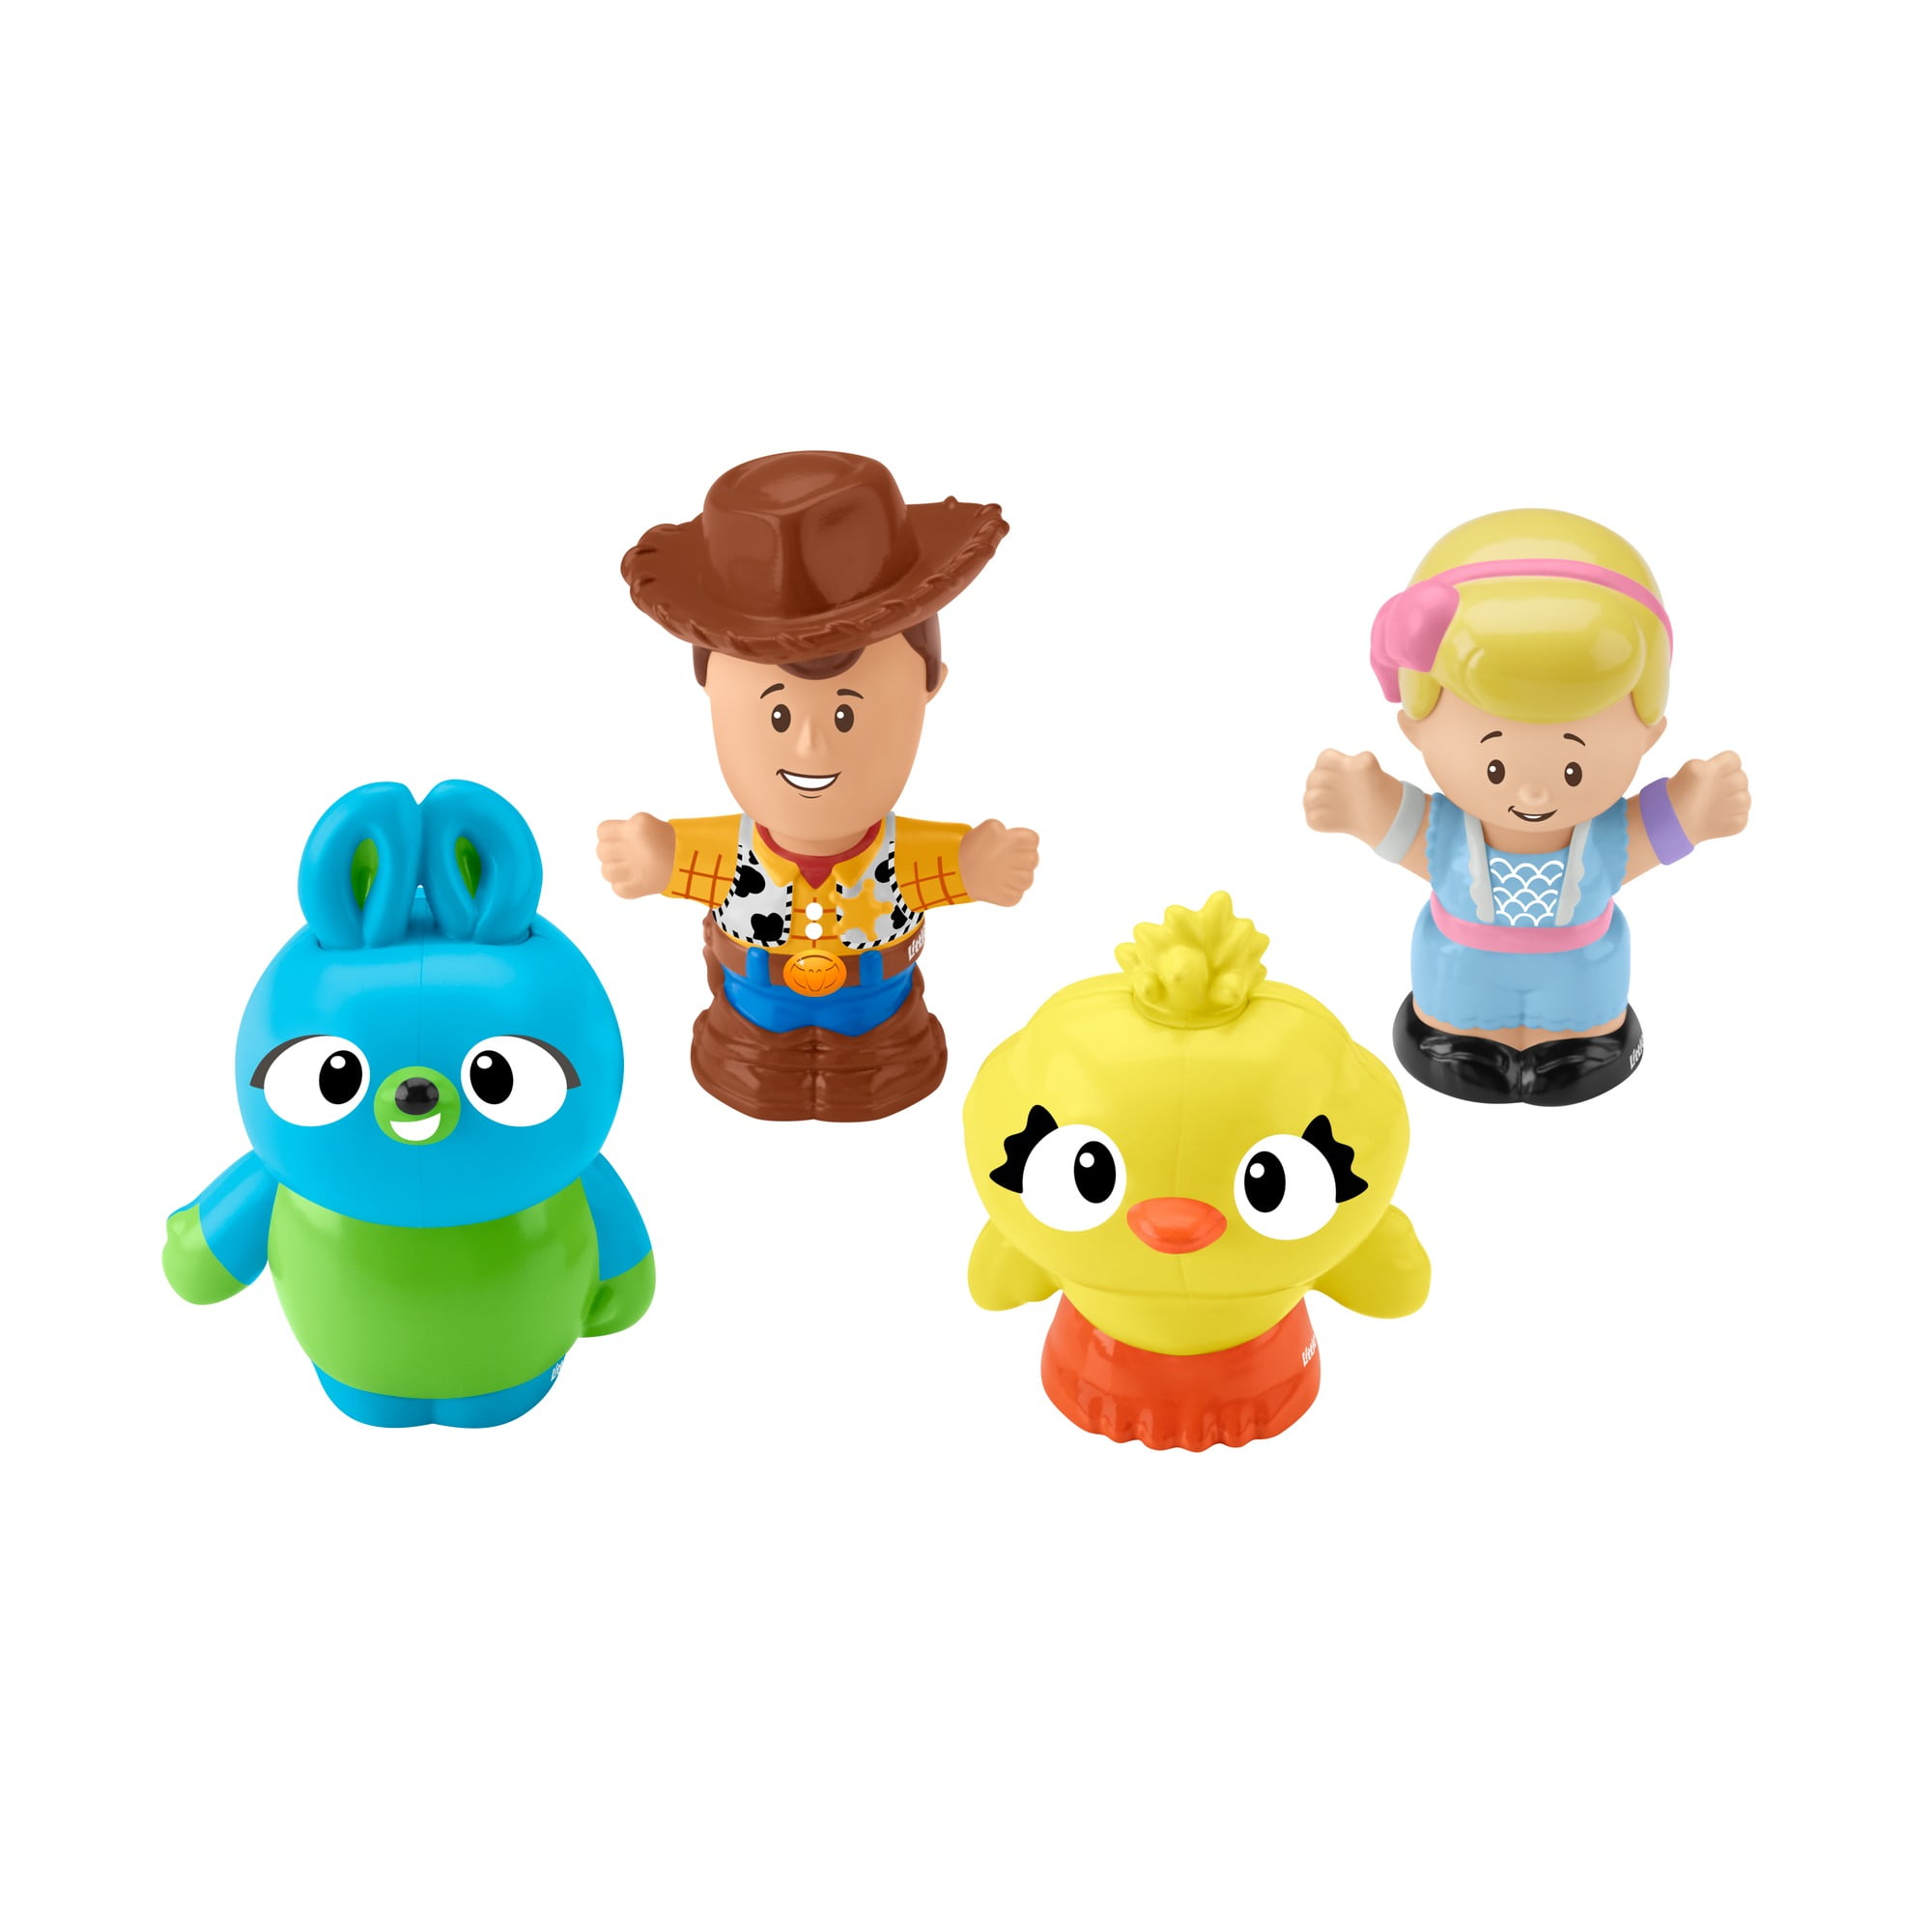 Disney Pixar 2019 Toy Story 4 Jessie & Rex Little People Fisher for sale online 